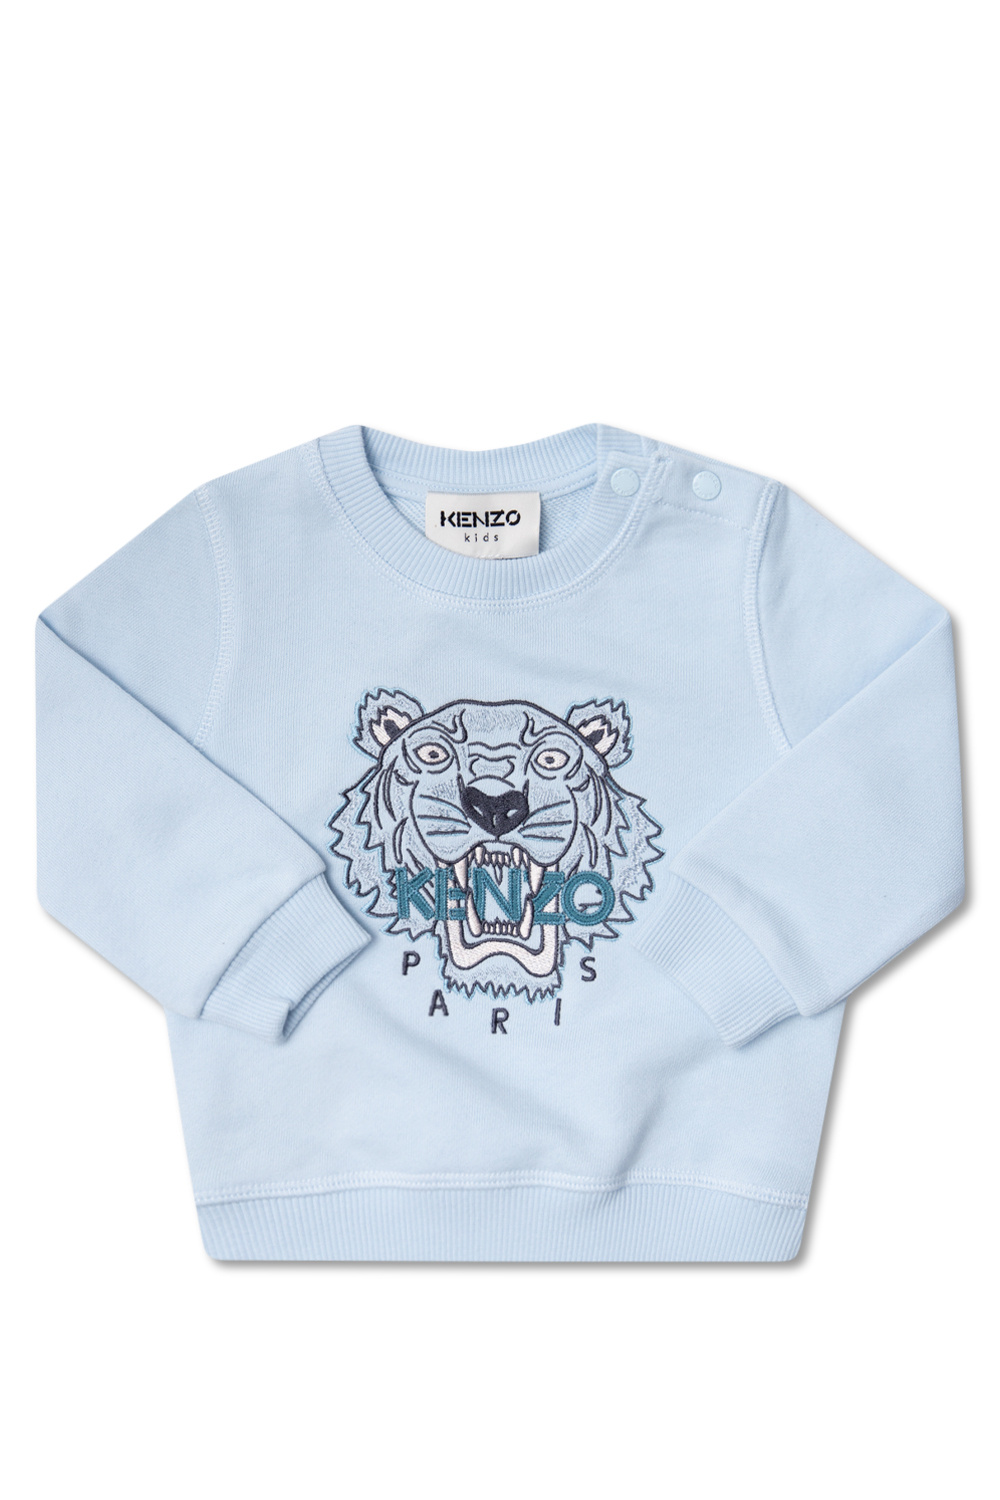 Kenzo Kids sweatshirt wrap with tiger motif